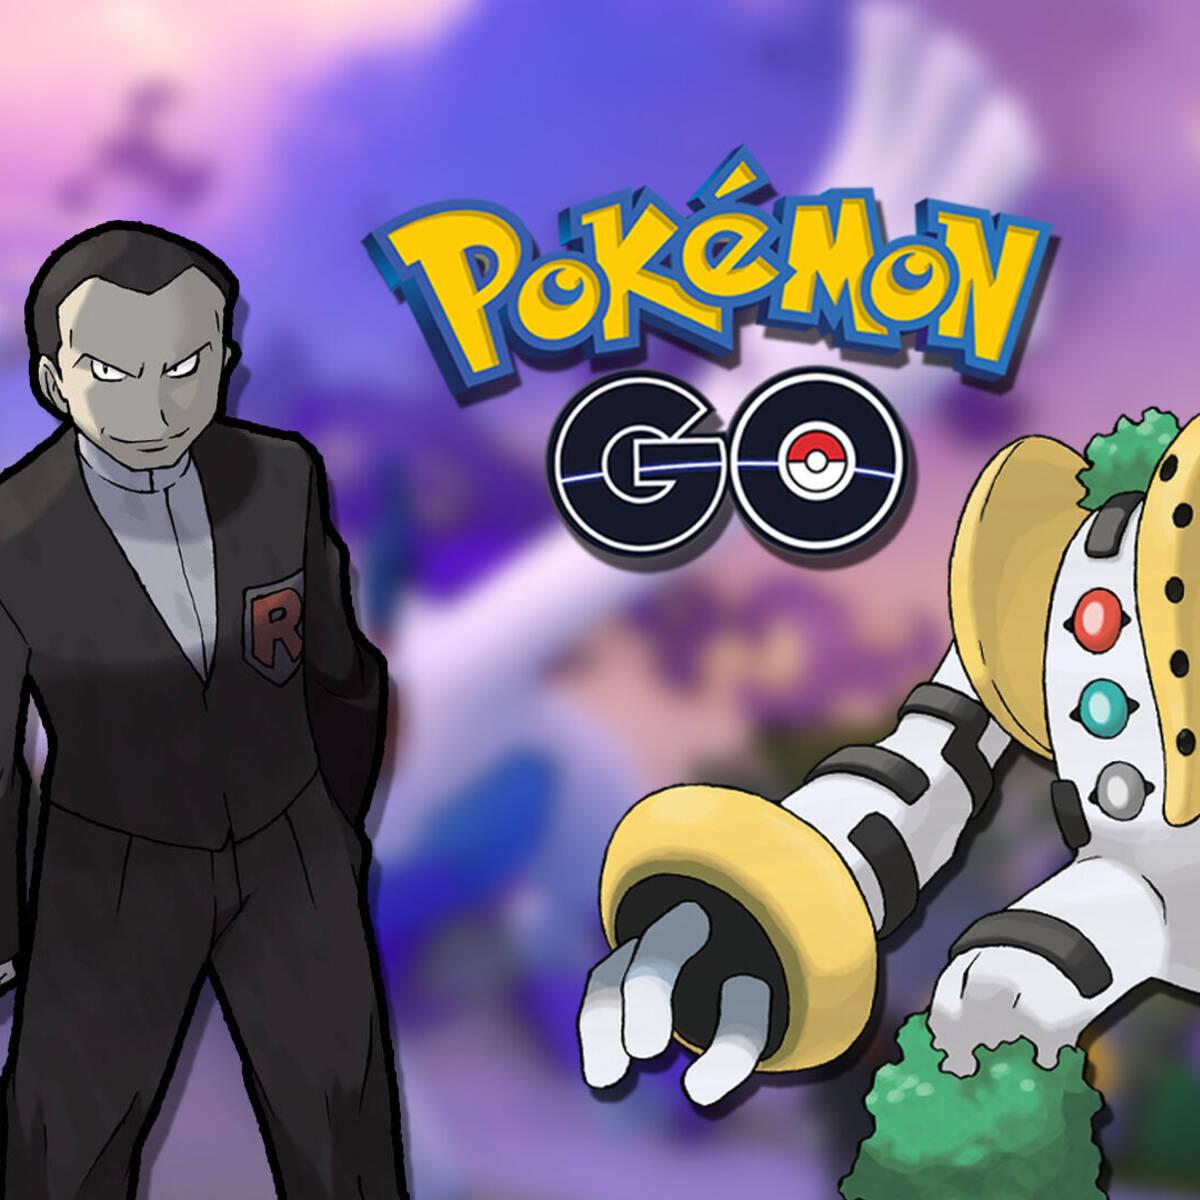 Pokémon GO: como derrotar Giovanni e counters do líder da Team Rocket, esports